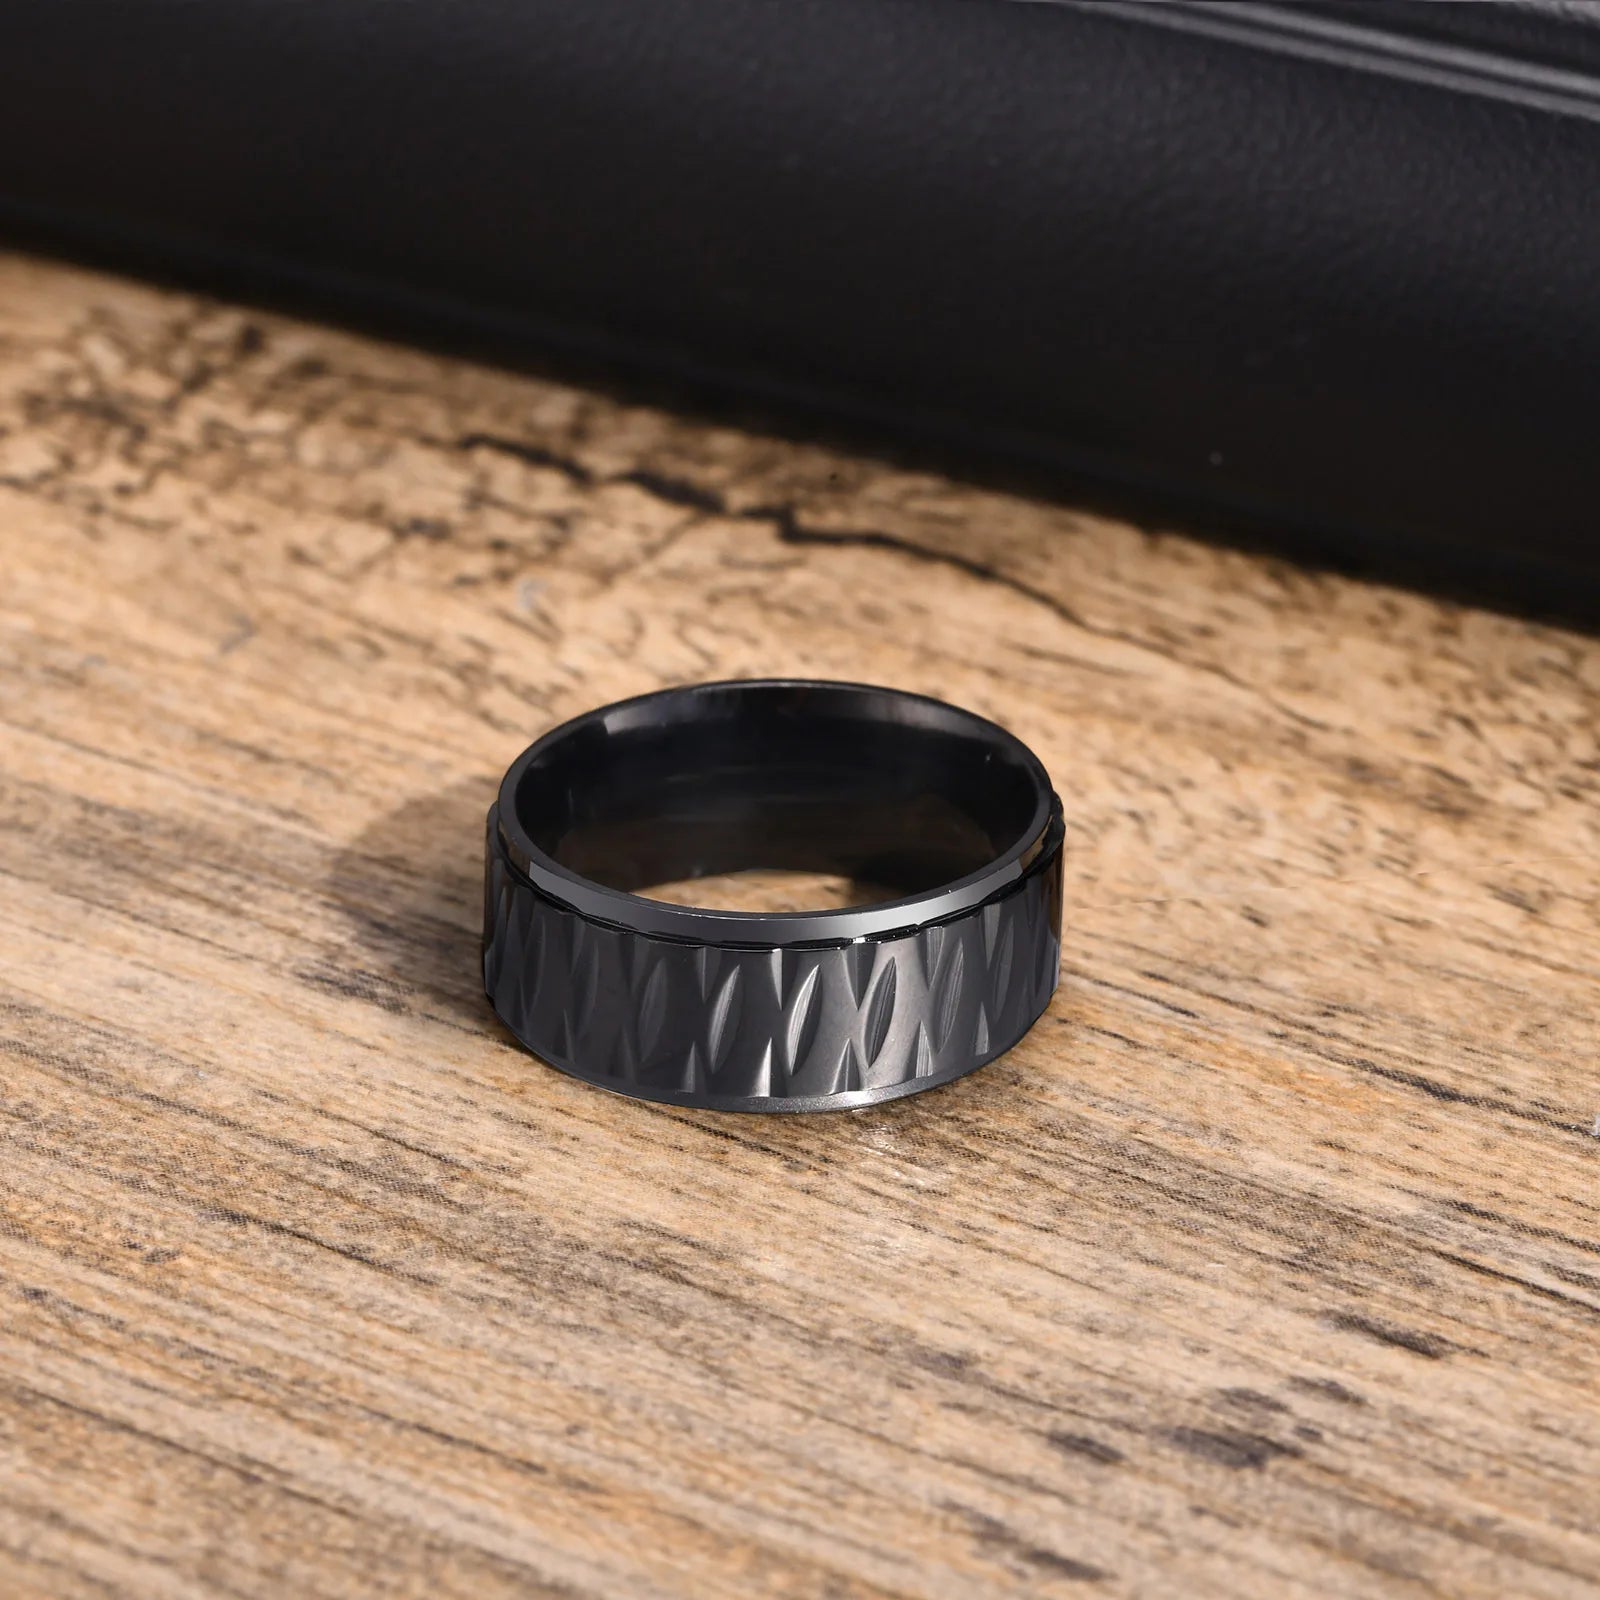 Men's Metal Stainless Steel Prong Setting Geometric Shaped Ring